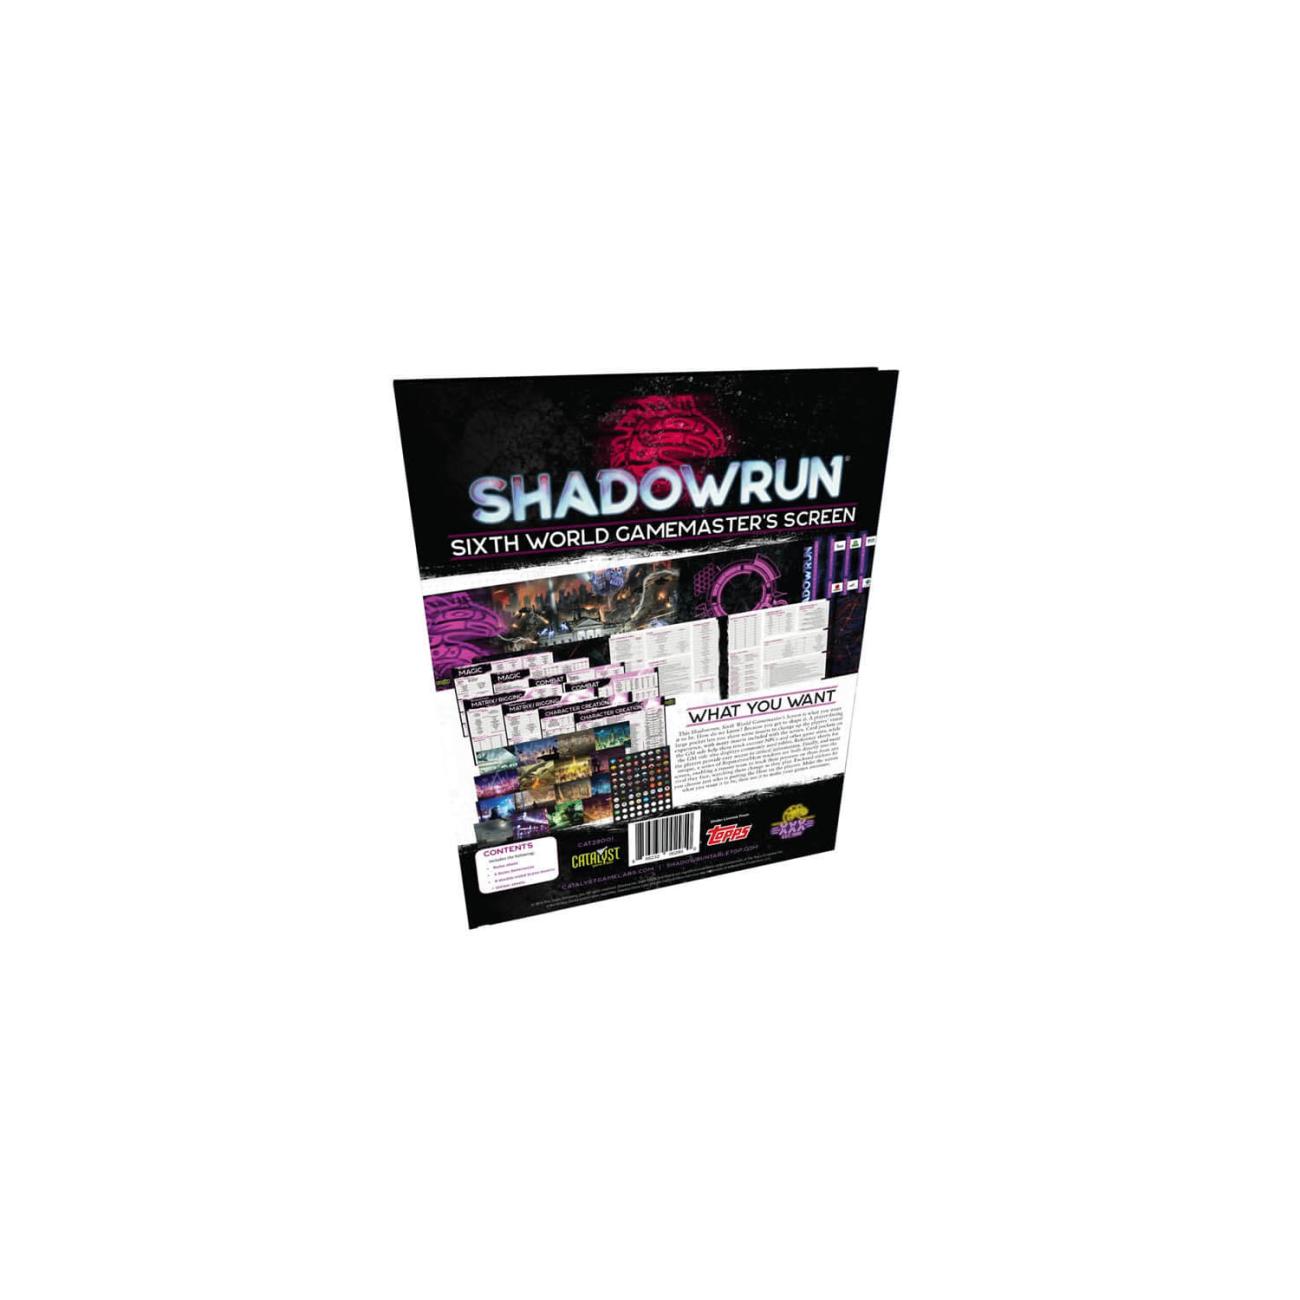 Shadowrun Sixth World Gamemaster's Screen